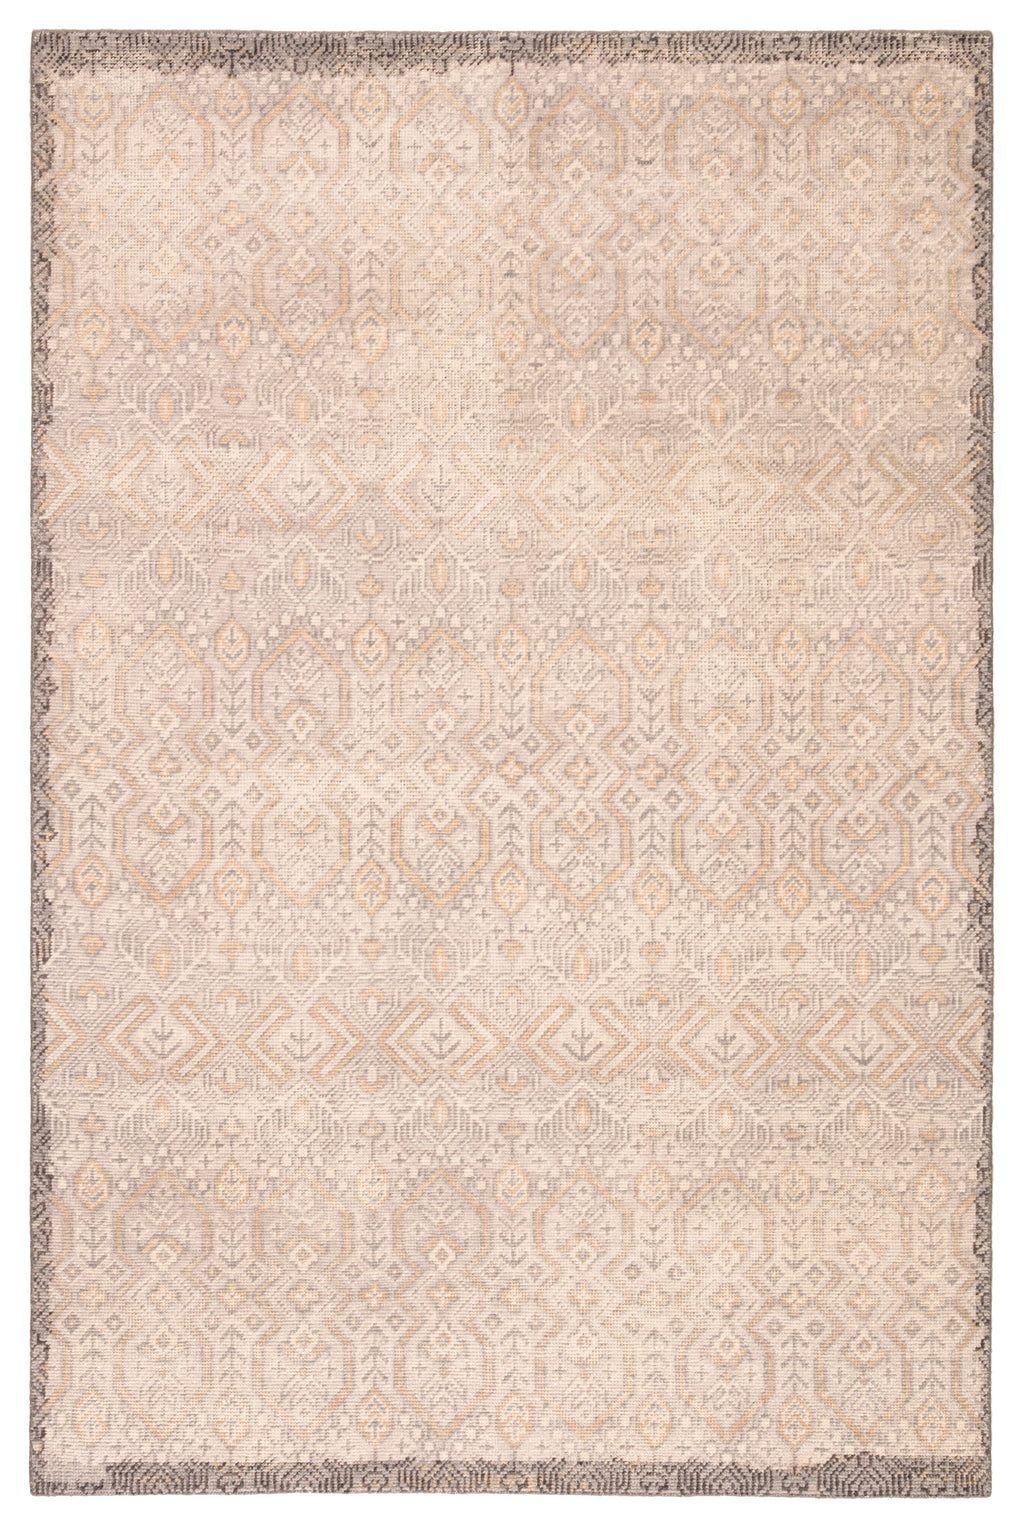 prospect tribal rug in whitecap gray pumice stone design by jaipur 1